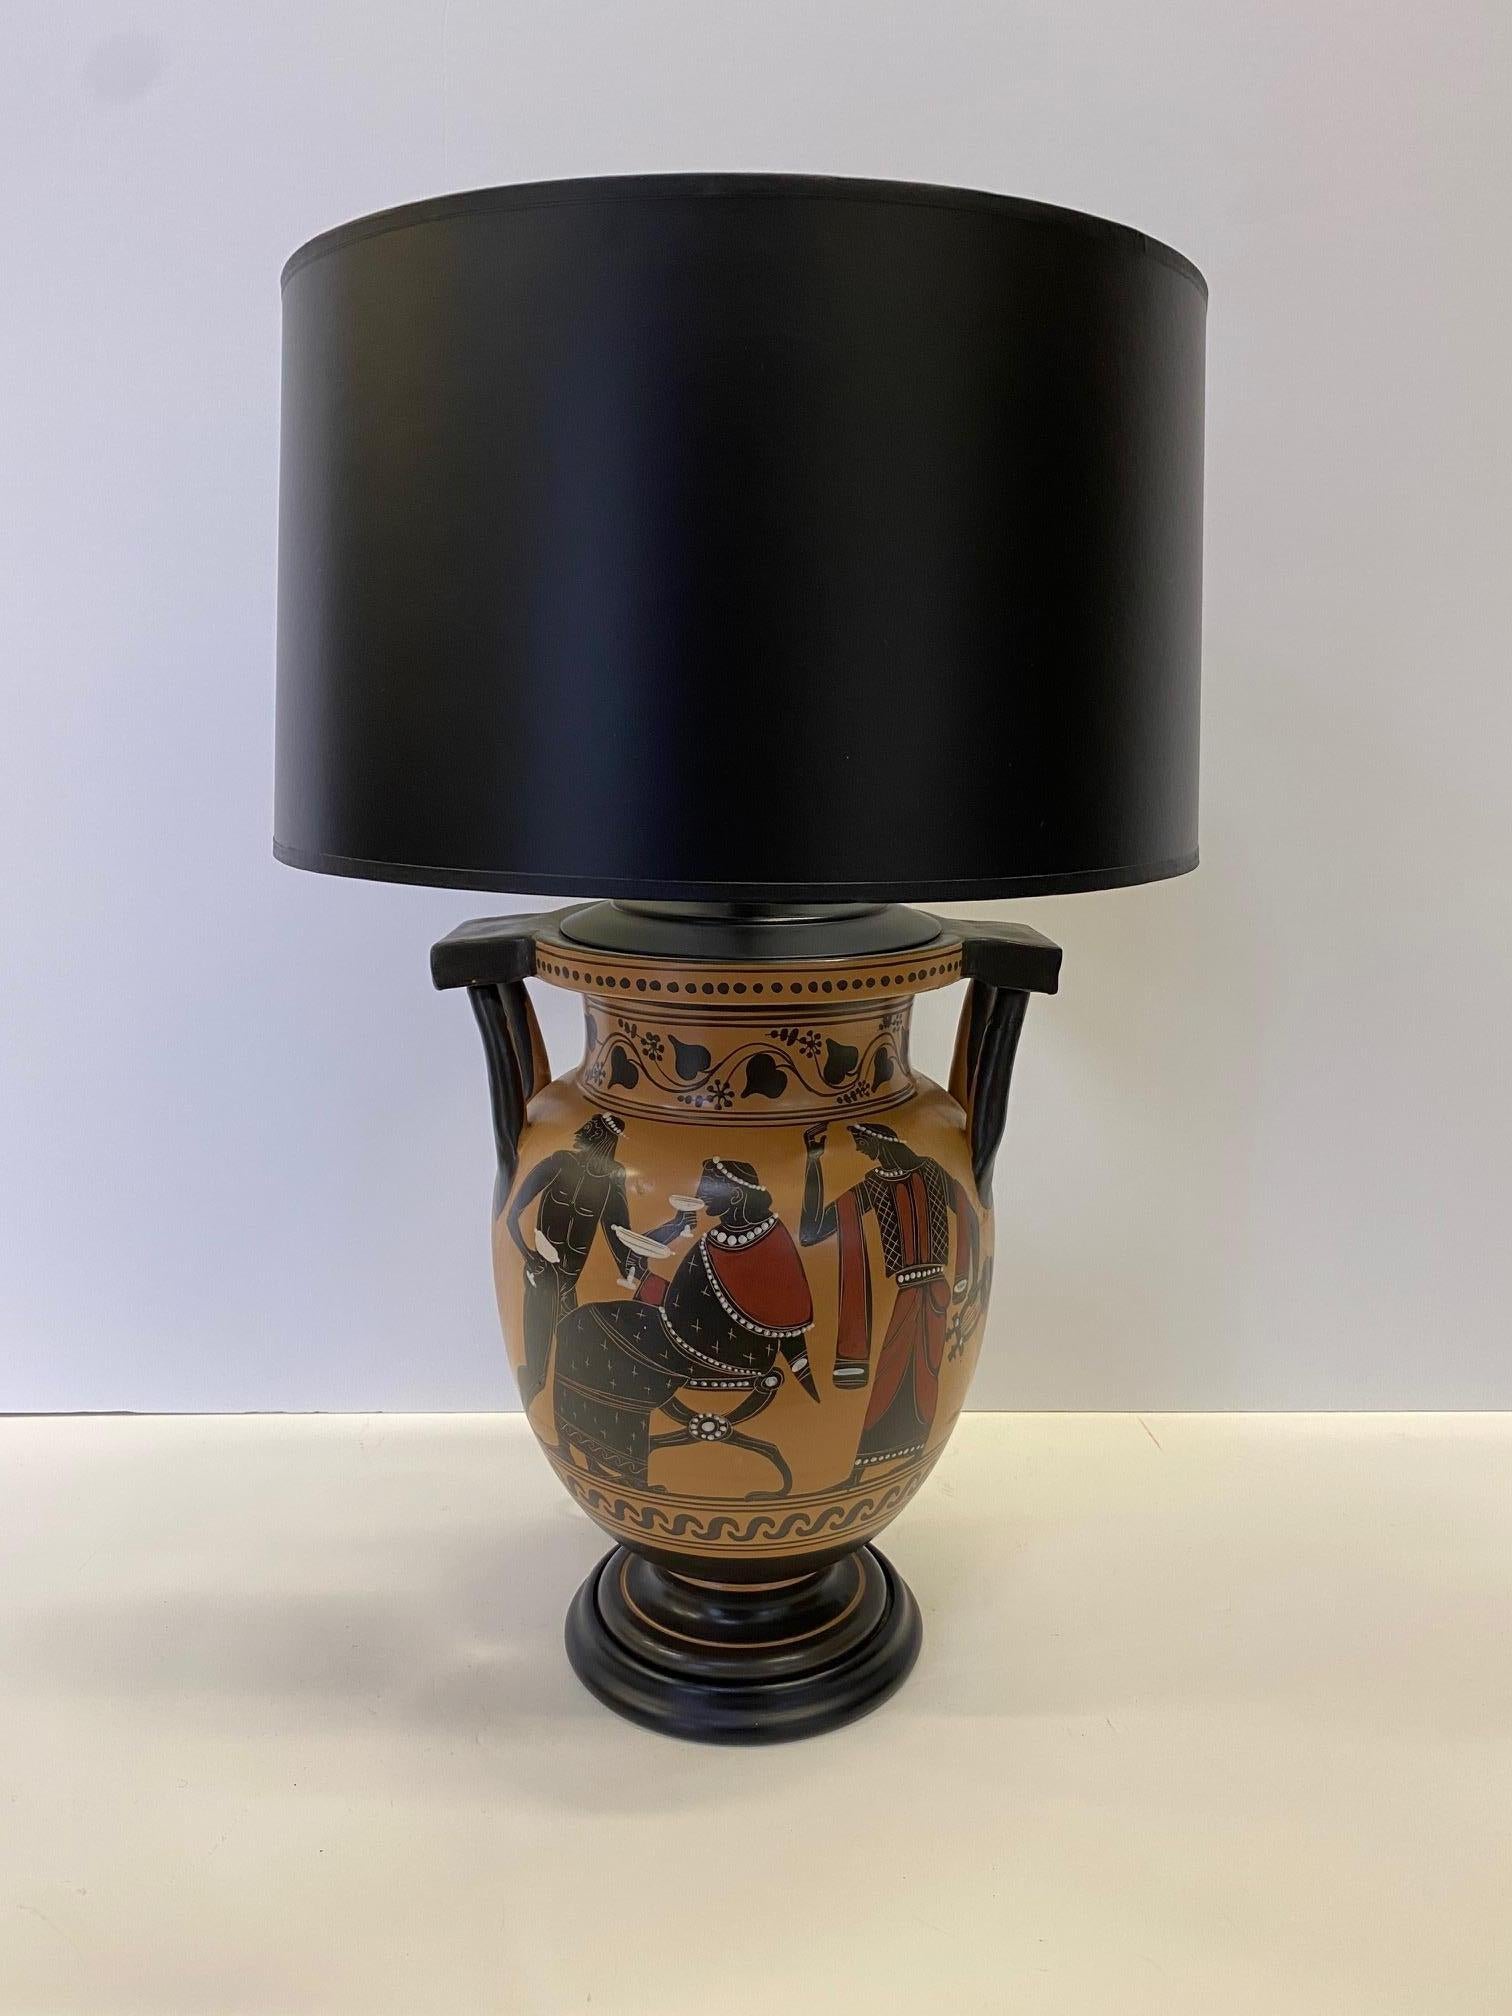 greek style lamps